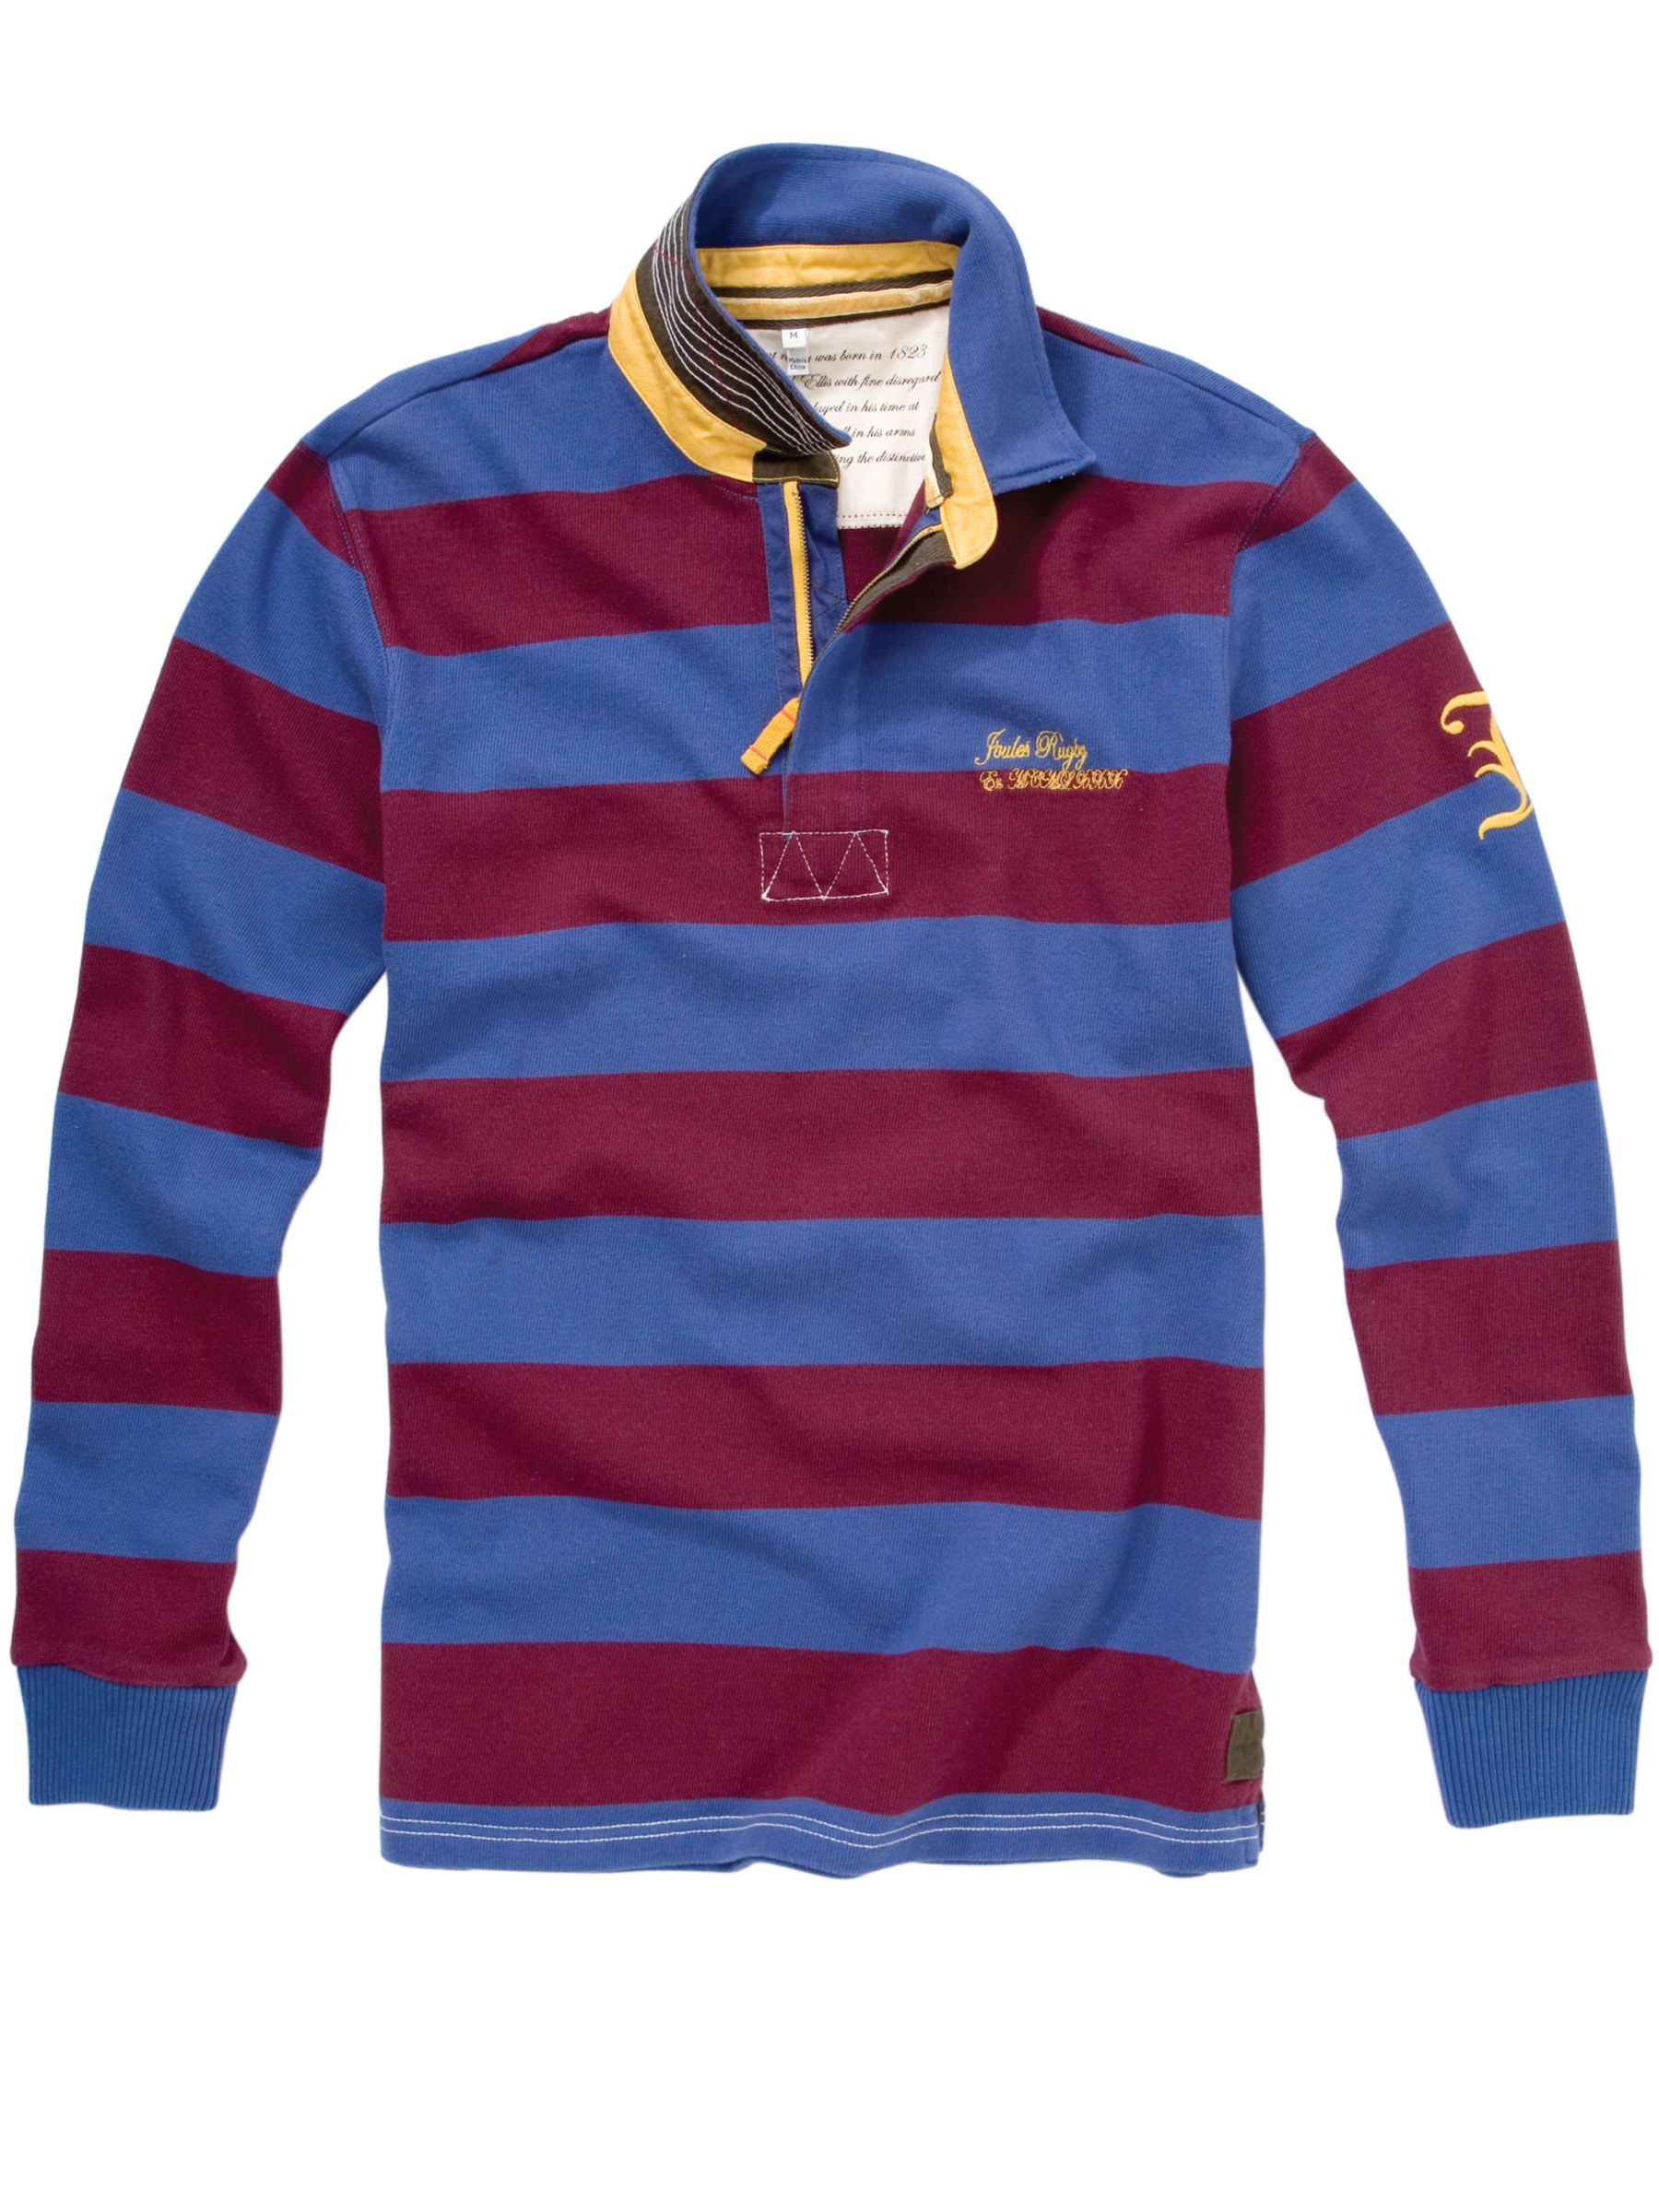 Berkeley Stripe Rugby Shirt, Ink Blue